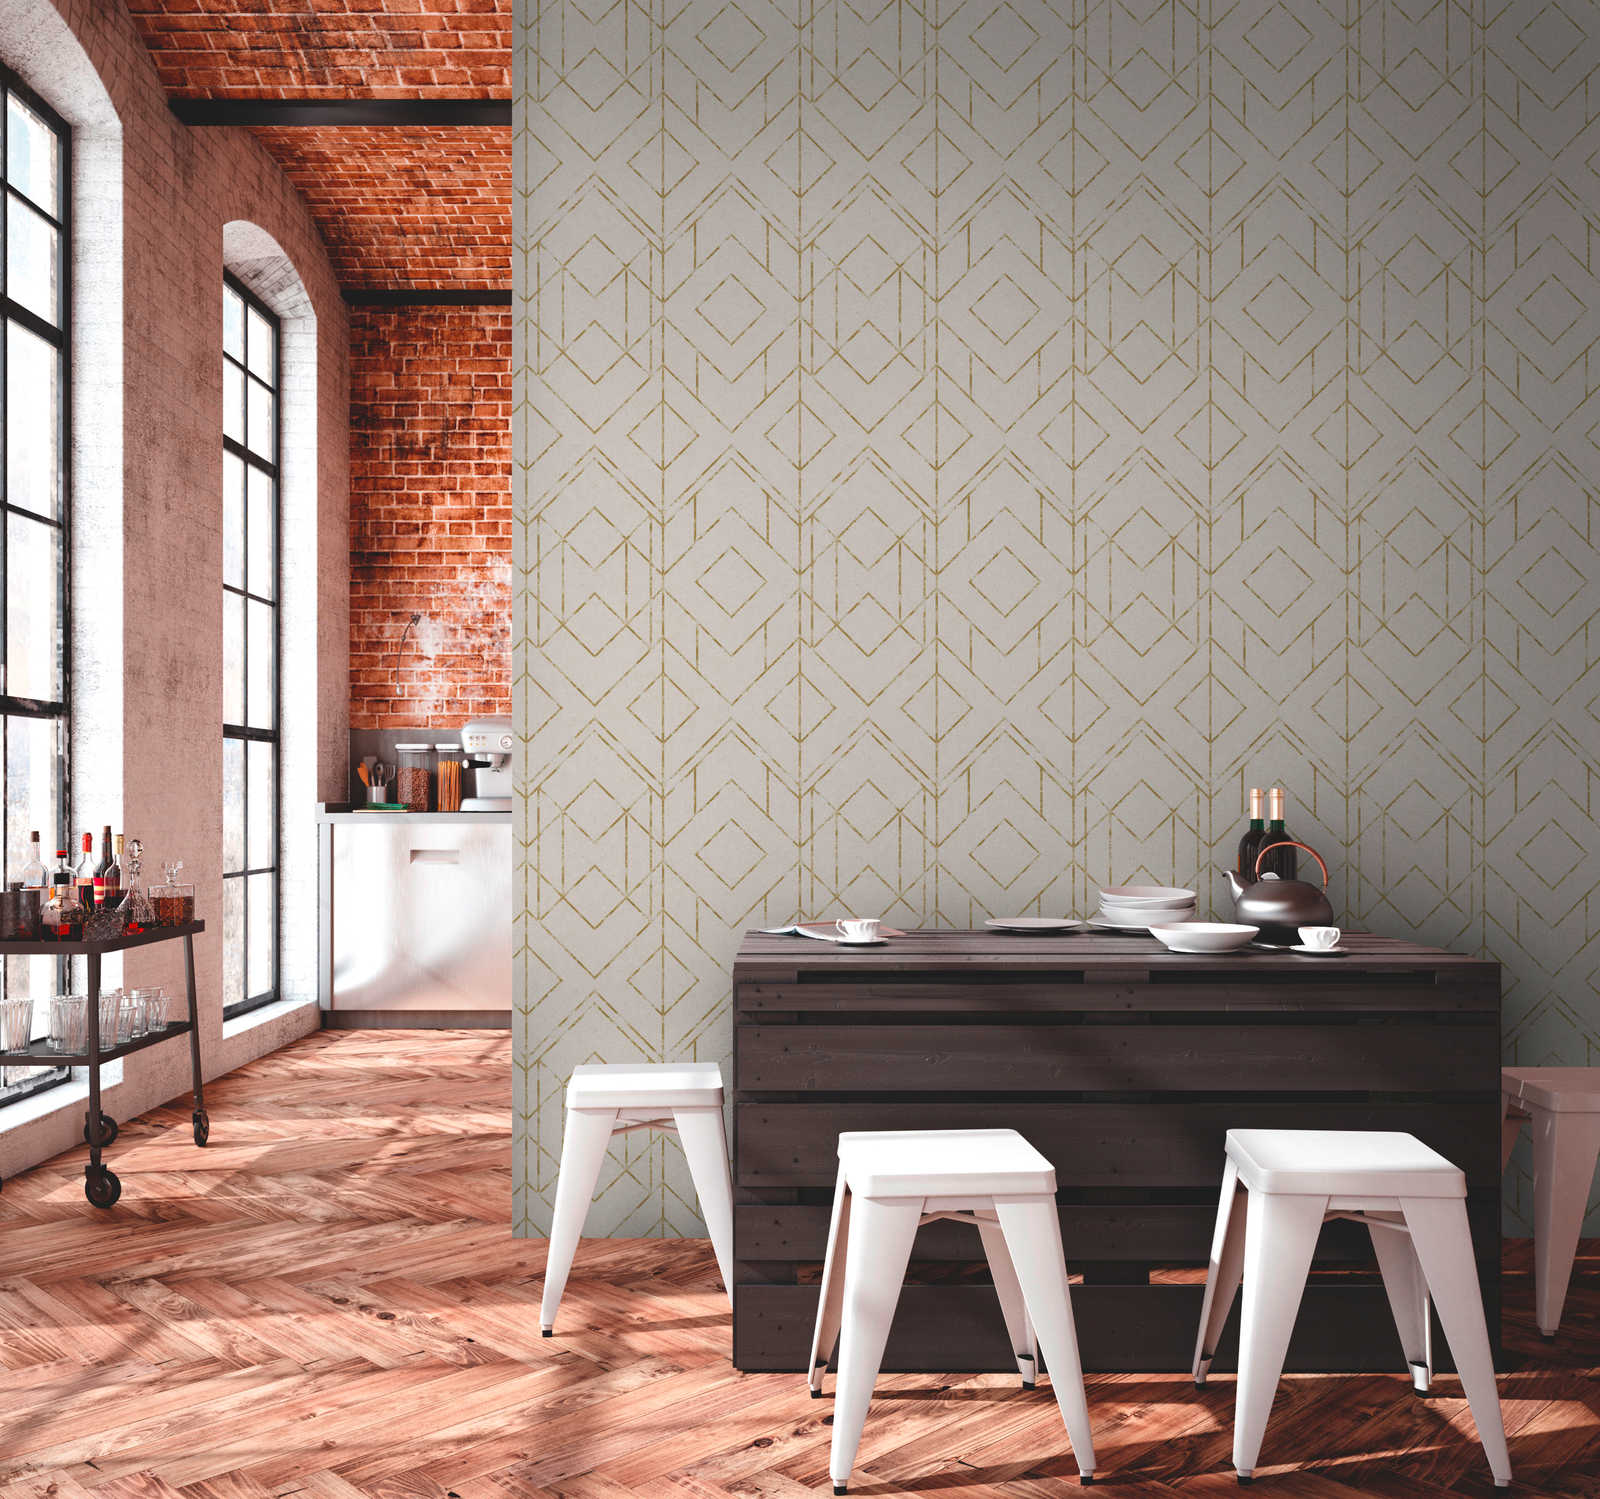             Non-woven wallpaper with metallic effect & graphic design - beige, metallic
        